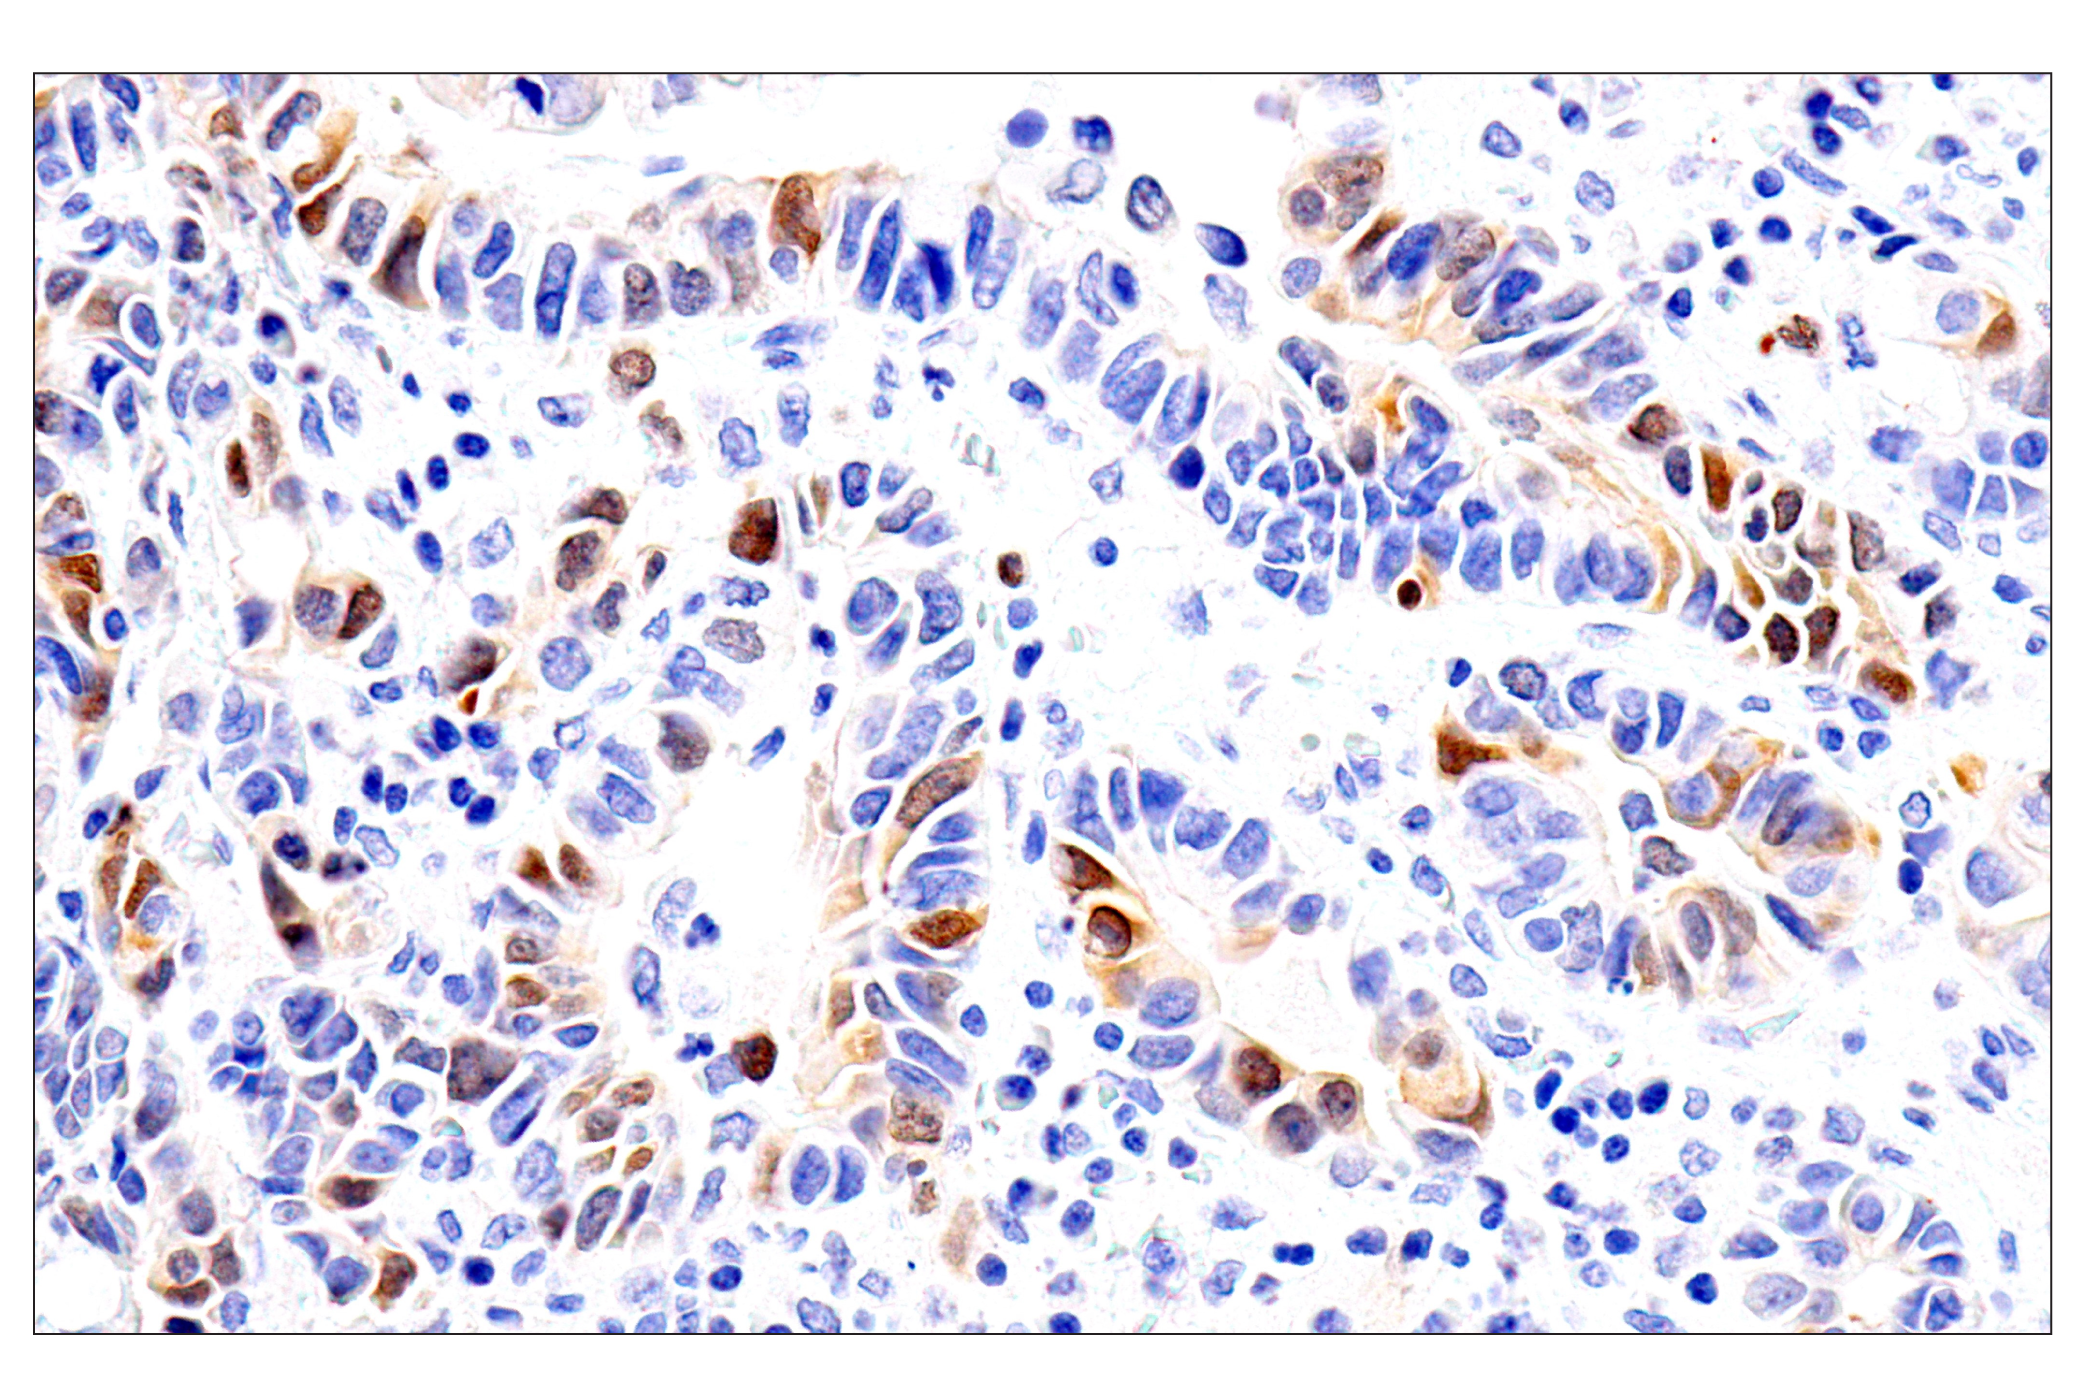  Image 11: PhosphoPlus® Chk1 (Ser317) Antibody Duet